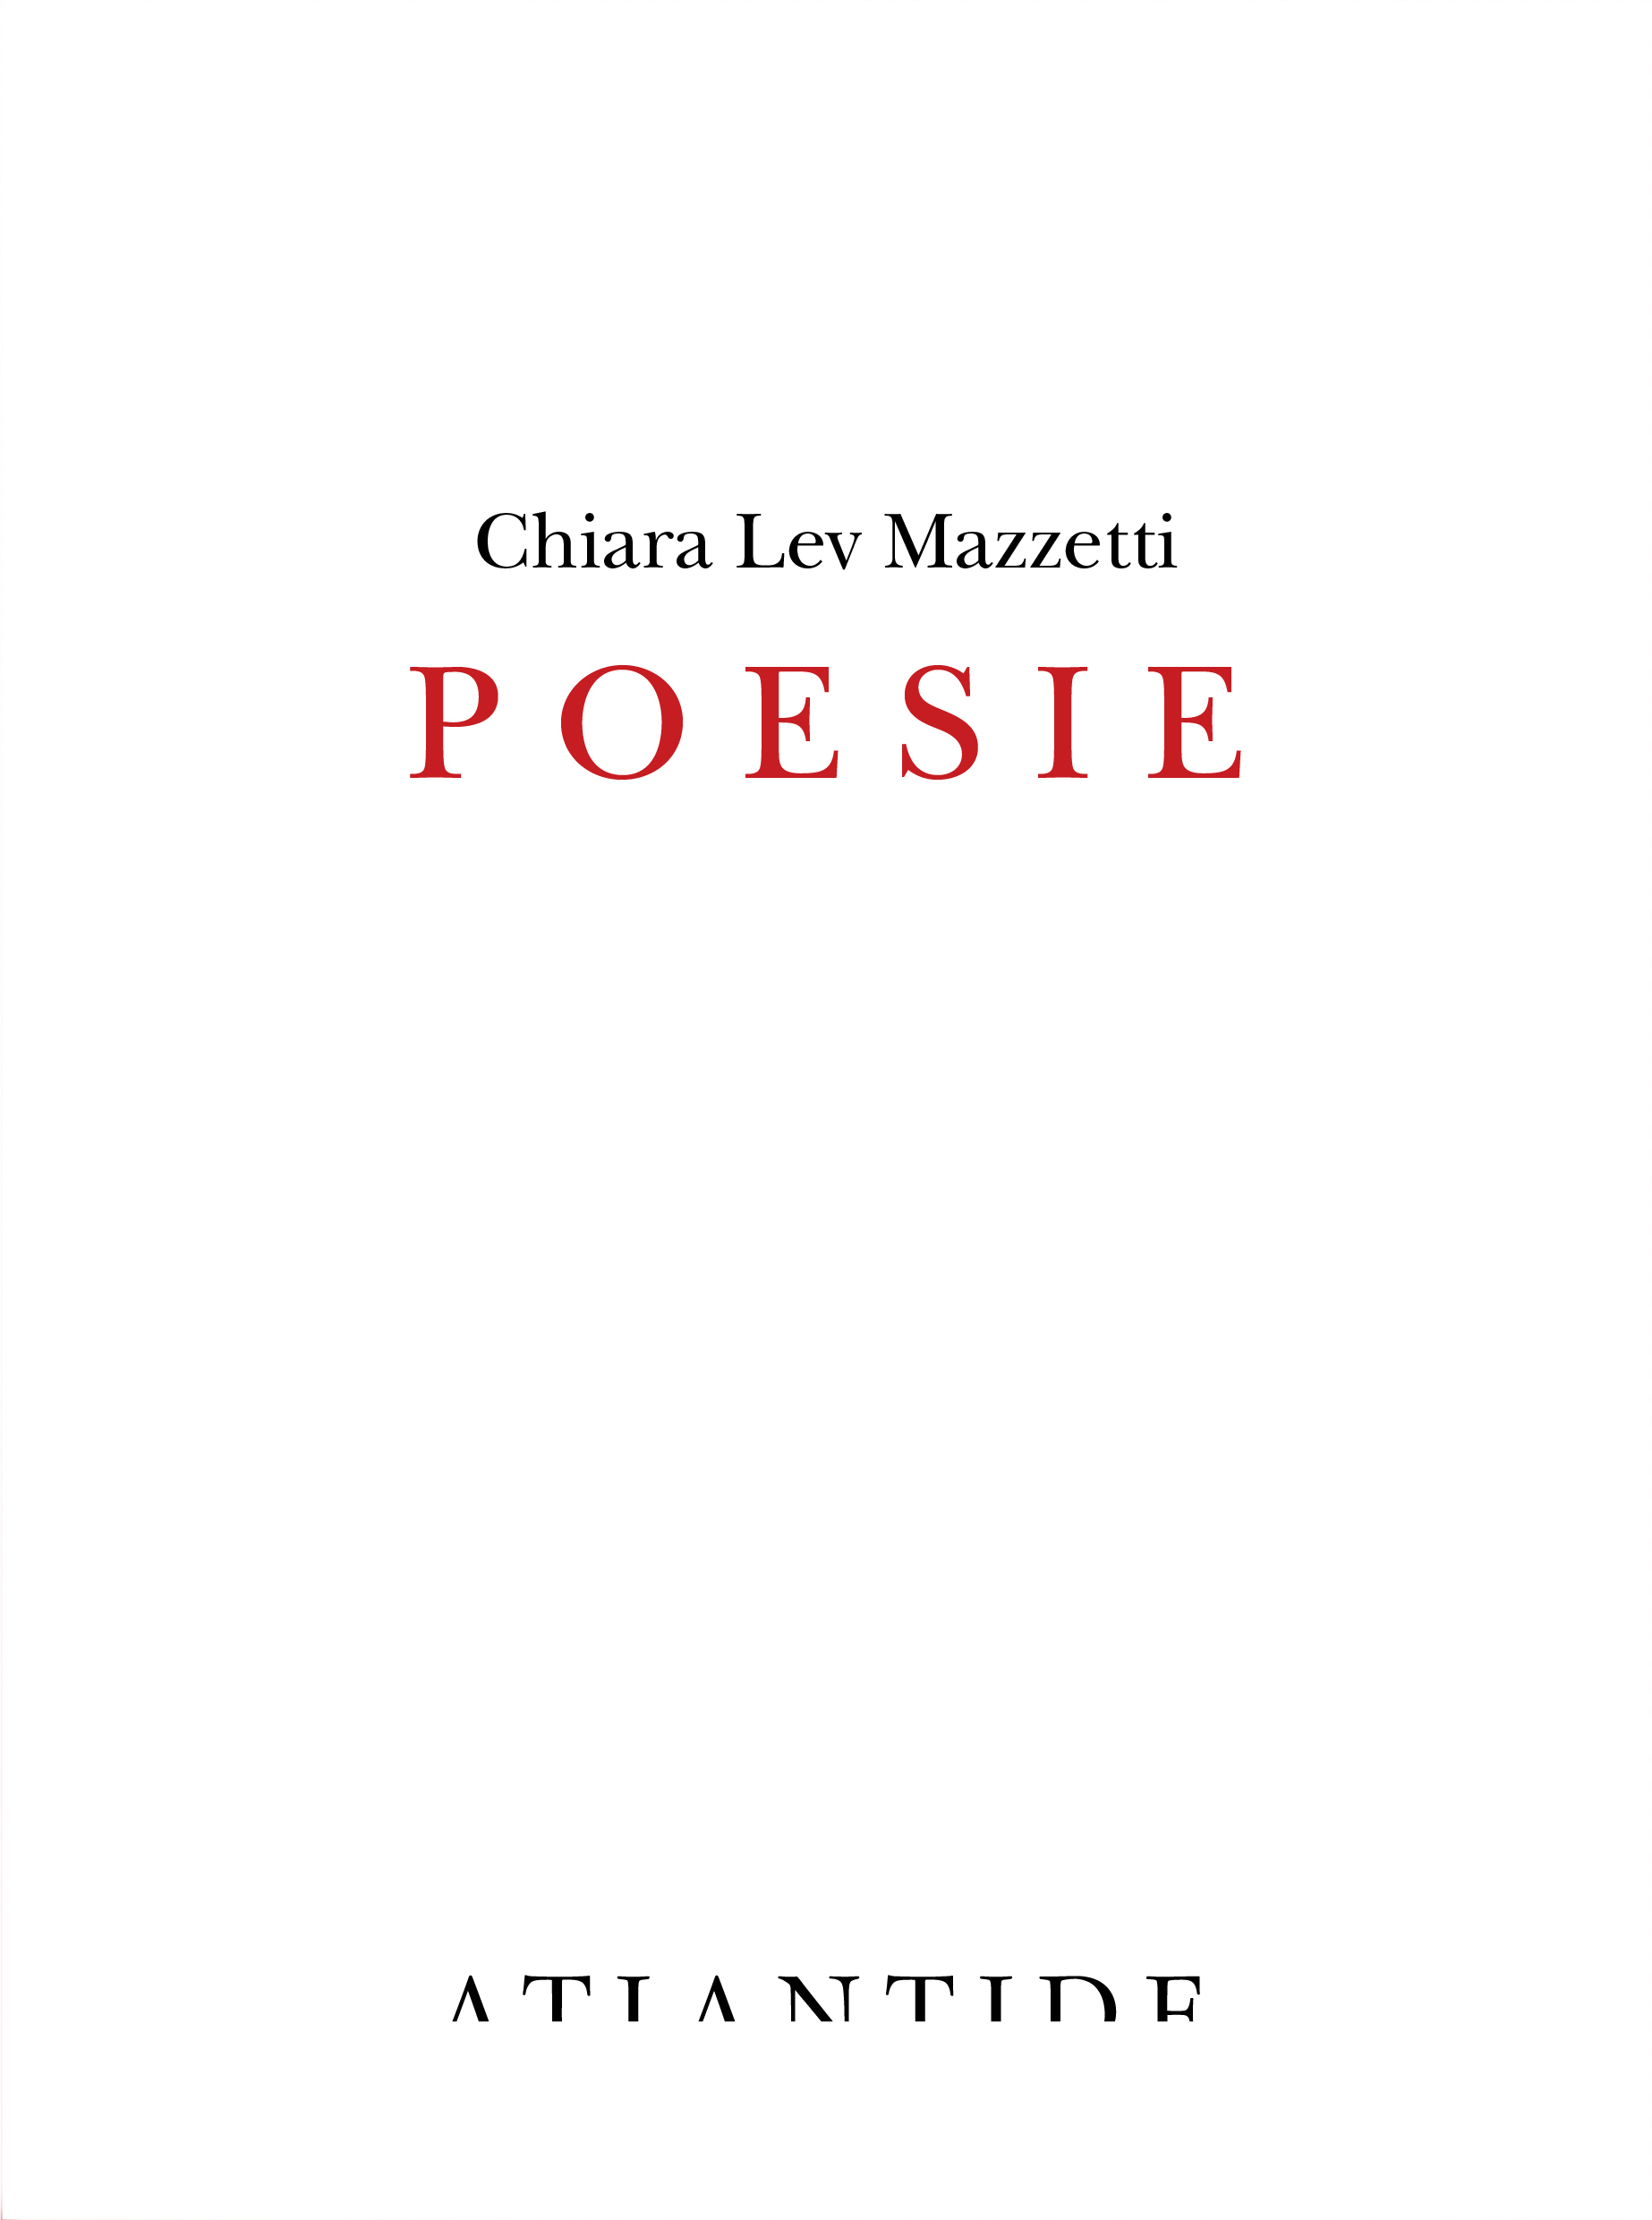 Chiara Lev Mazzetti Poesie Atlantide edizioni